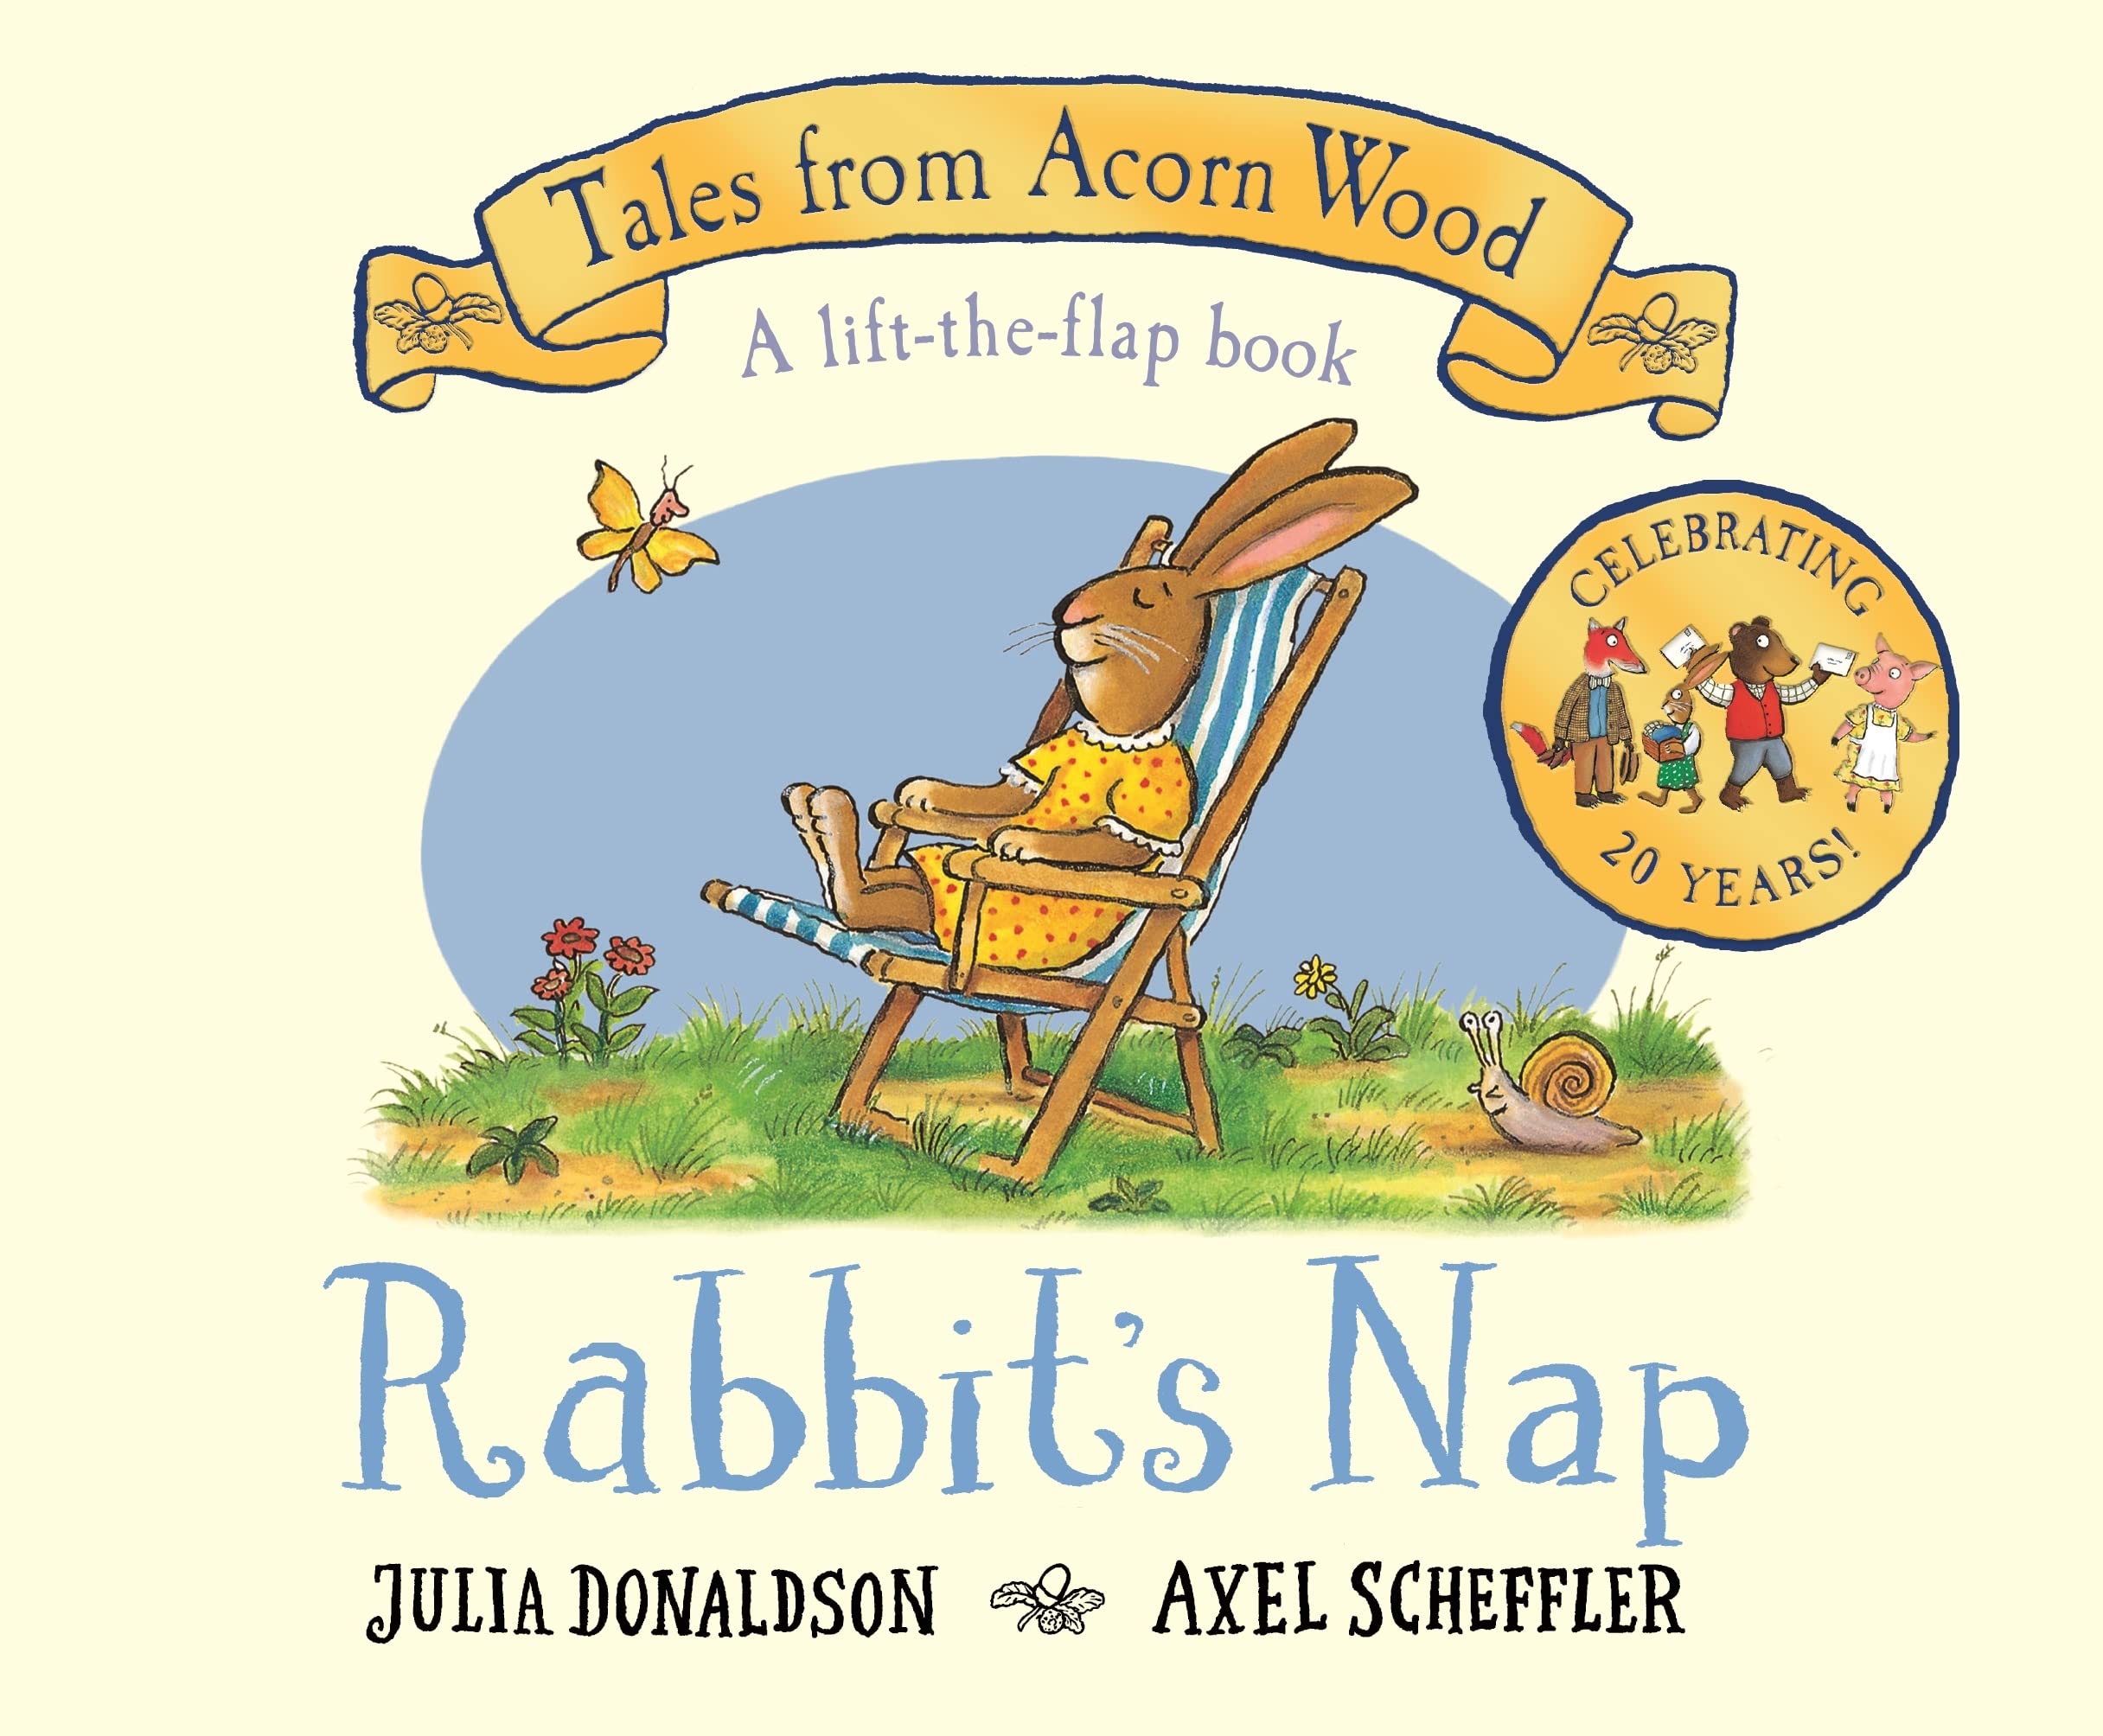 Rabbit's Nap Tales from Acorn Wood